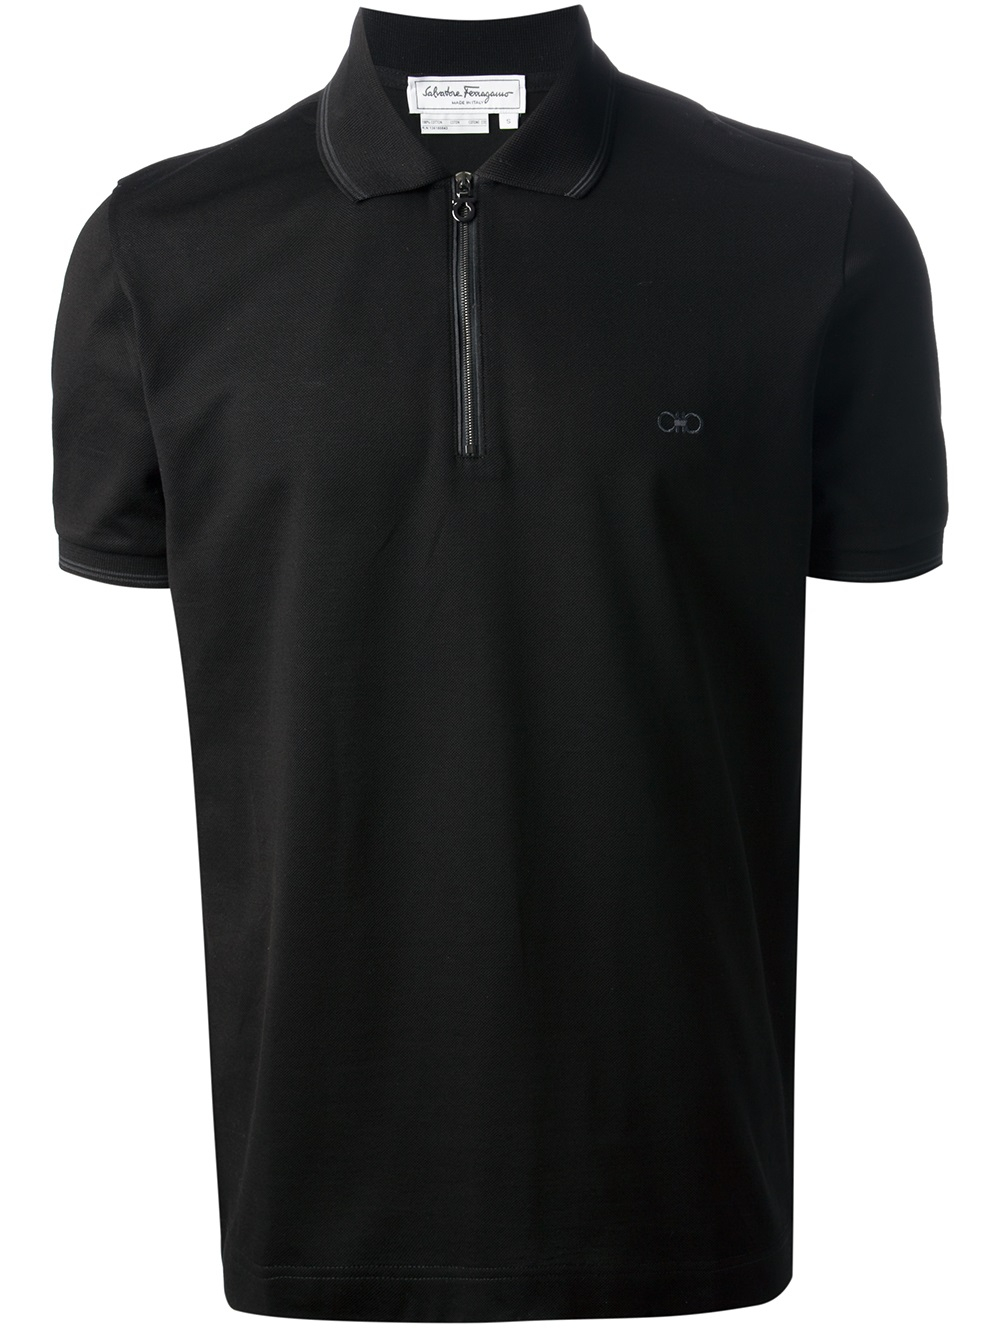 Lyst - Ferragamo Zip Fastening Polo Shirt in Black for Men